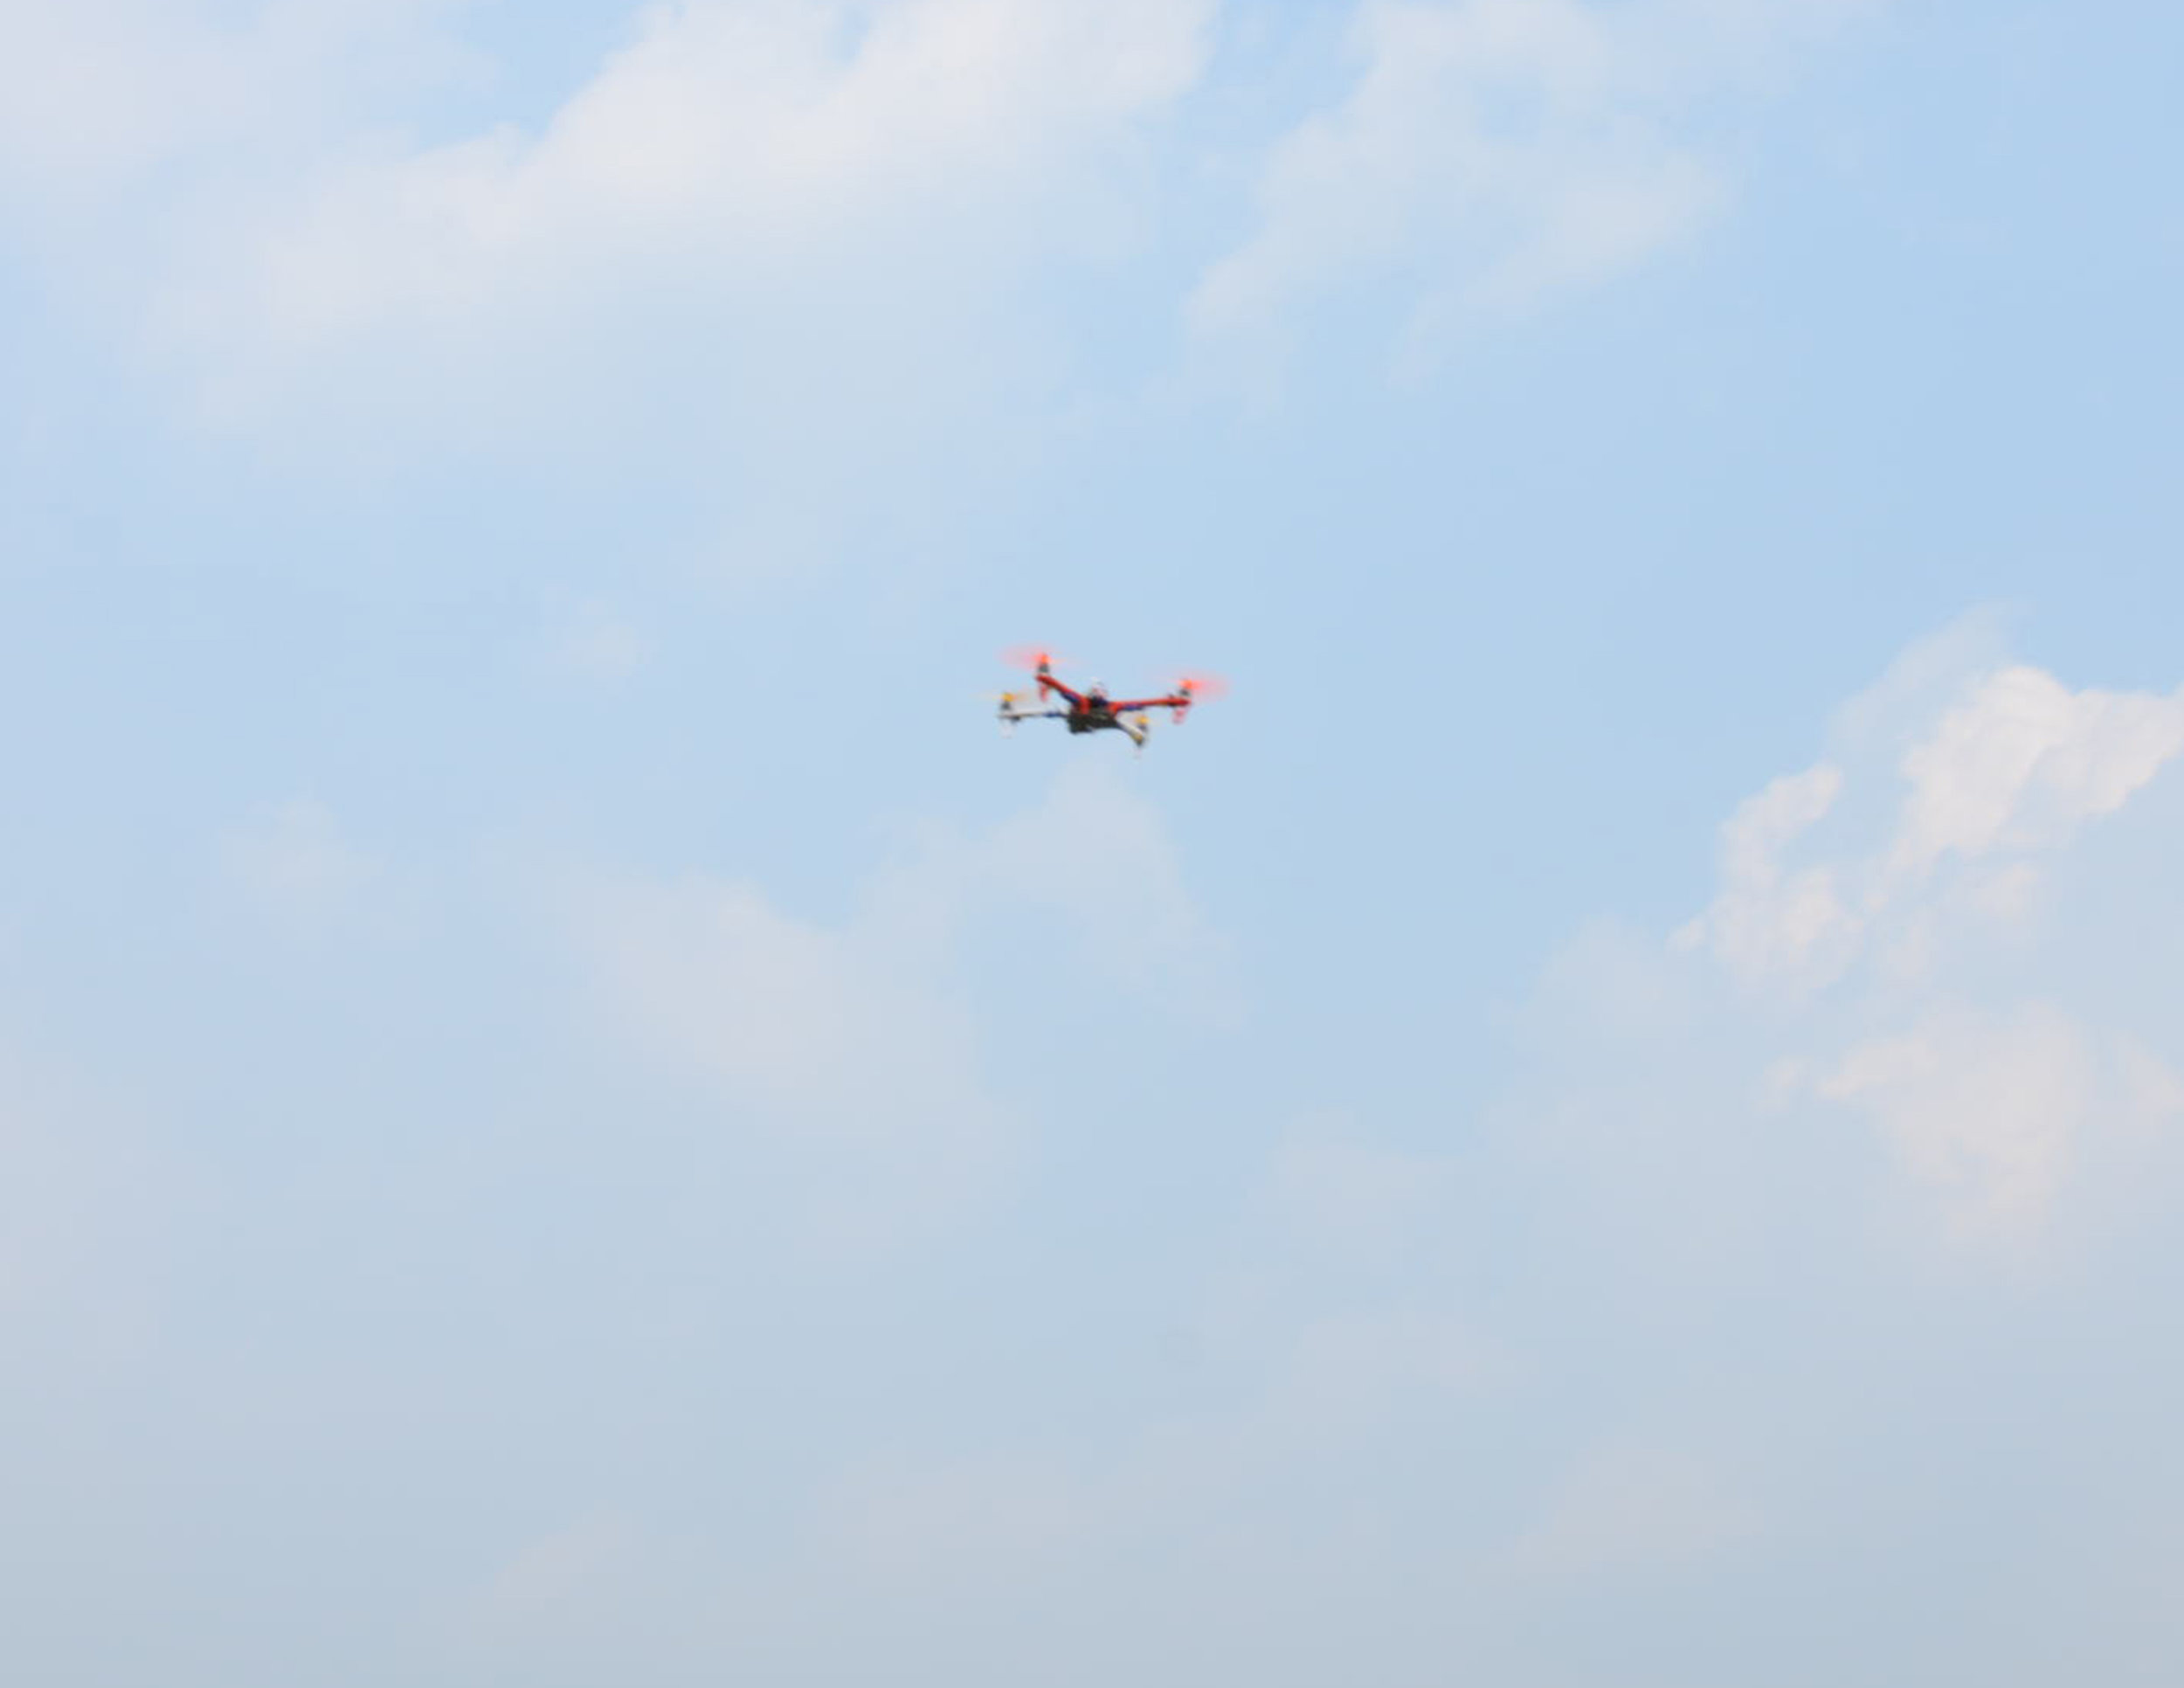 mck wrk 3-26-15 windhorse flight kathmandu 2015-03-24_05-24-44 (2).jpg